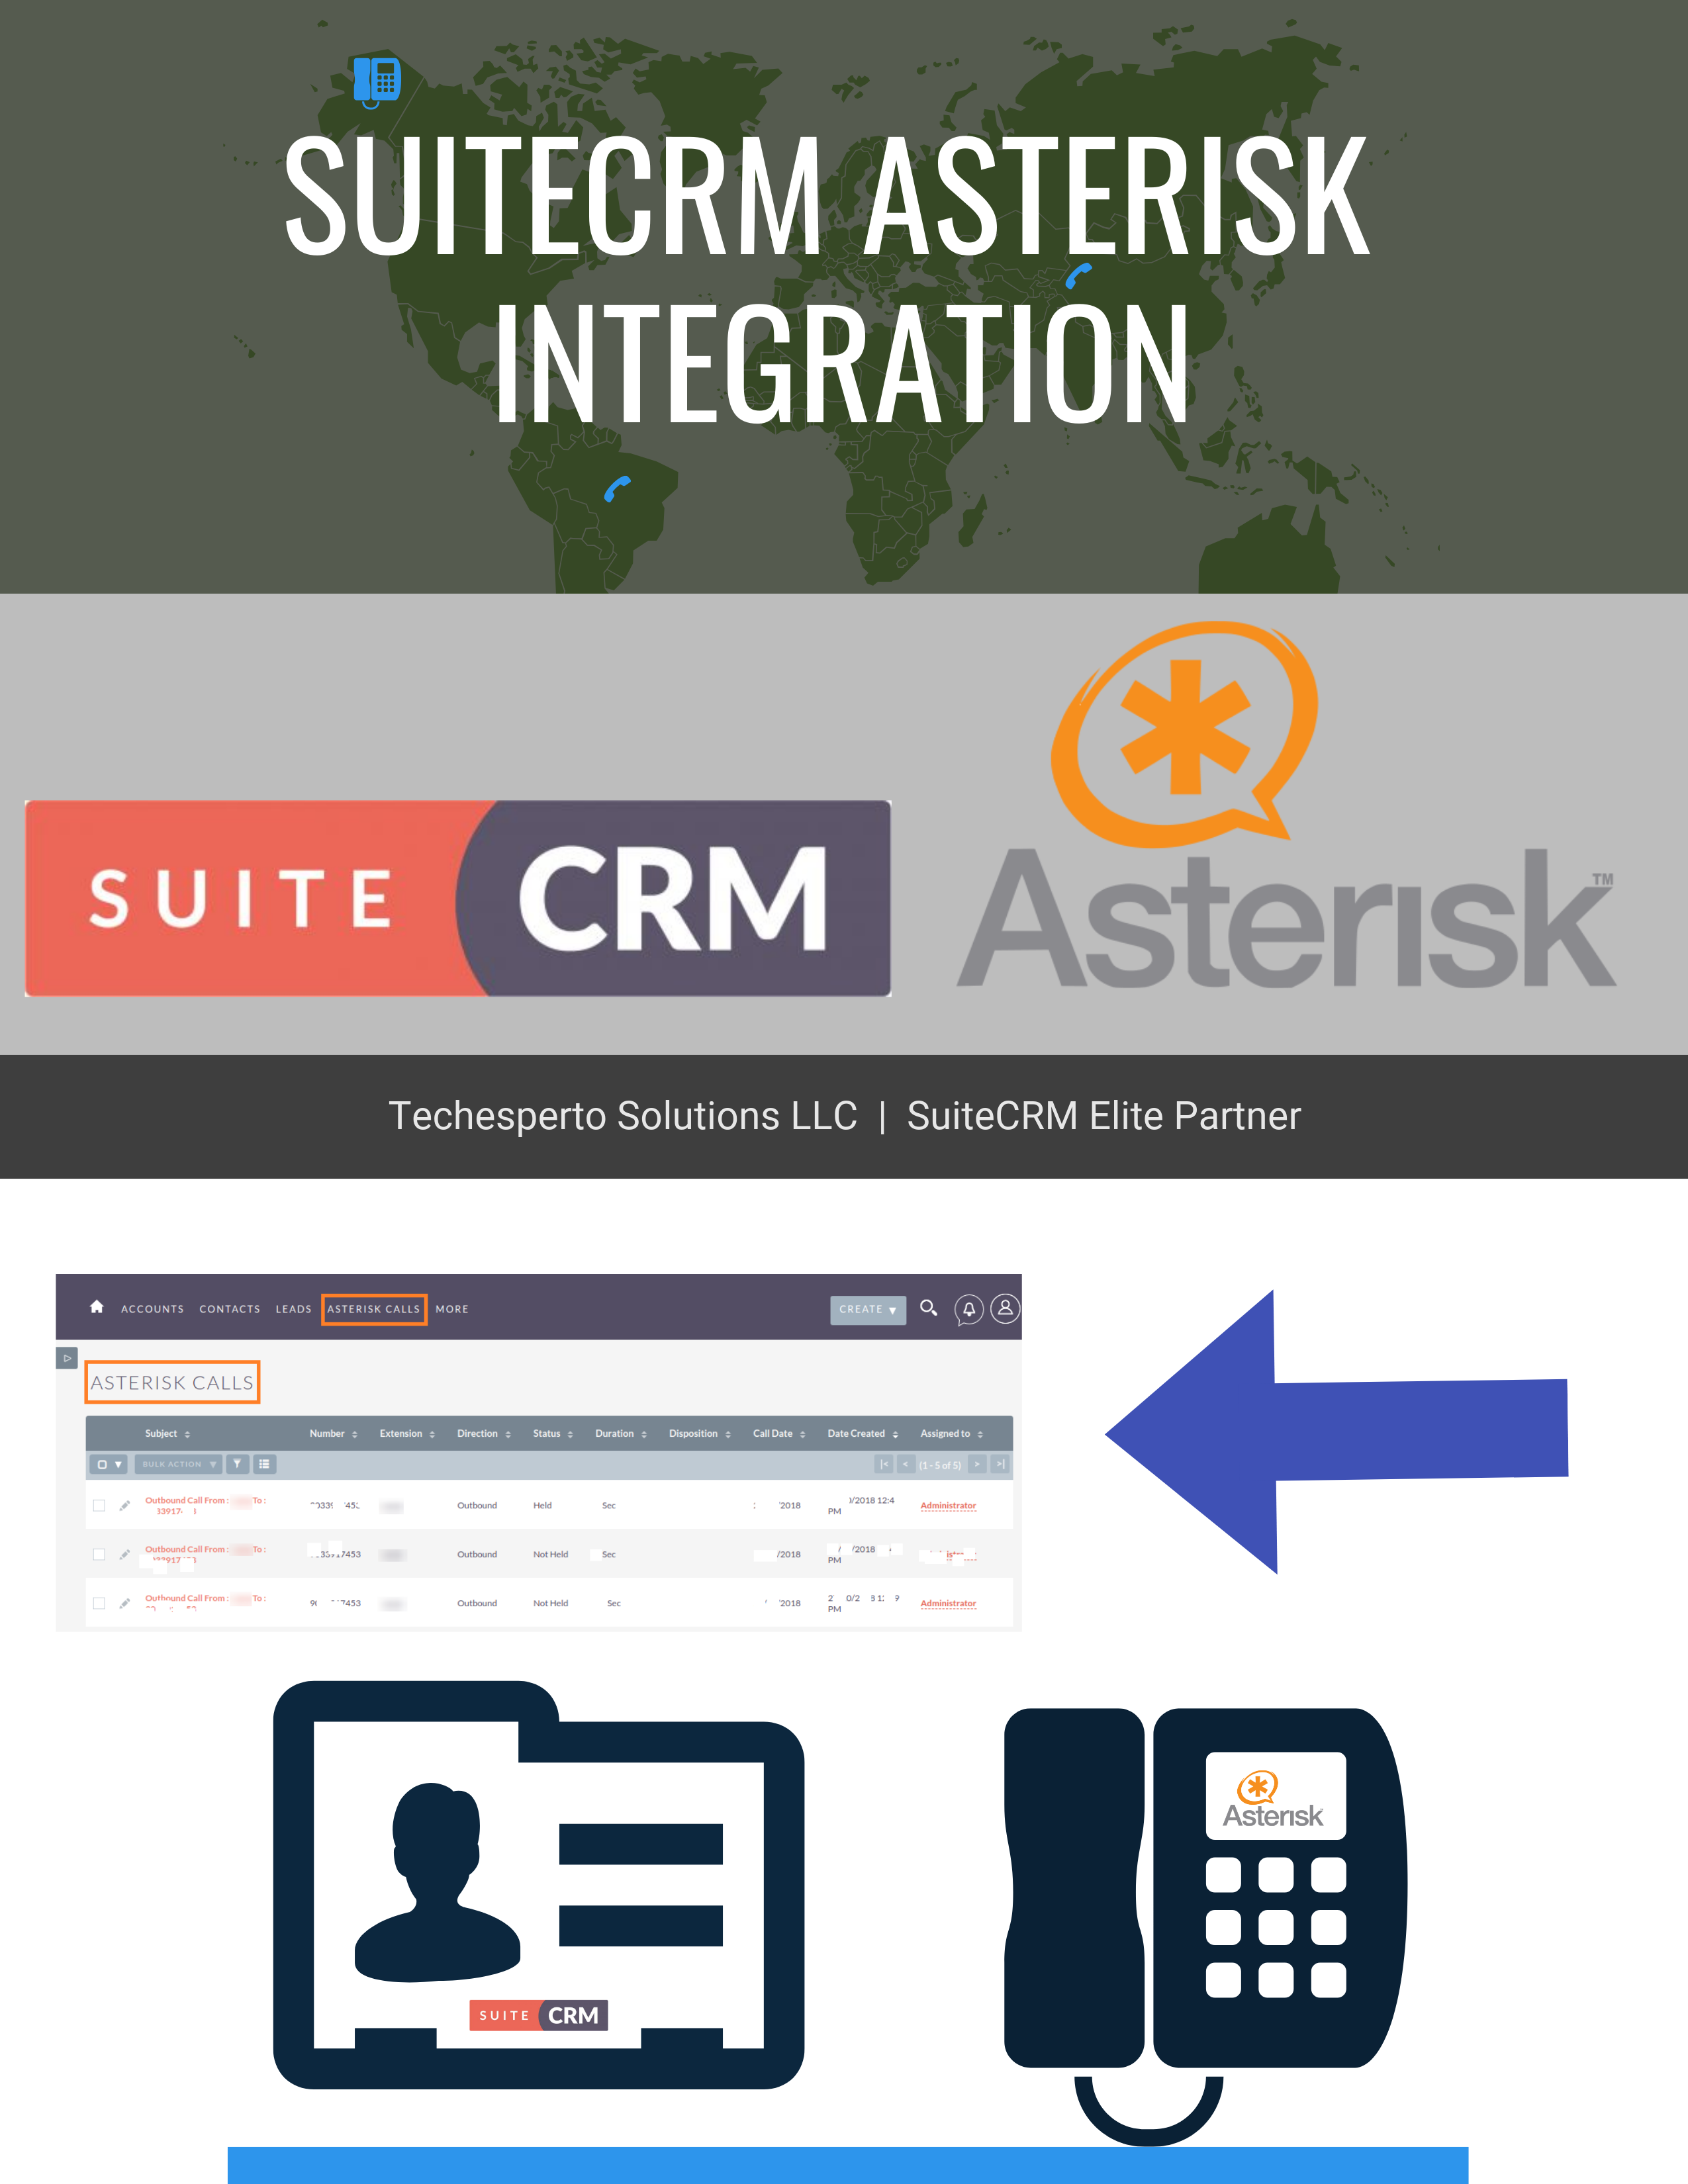 SuiteCRM Asterisk integration 